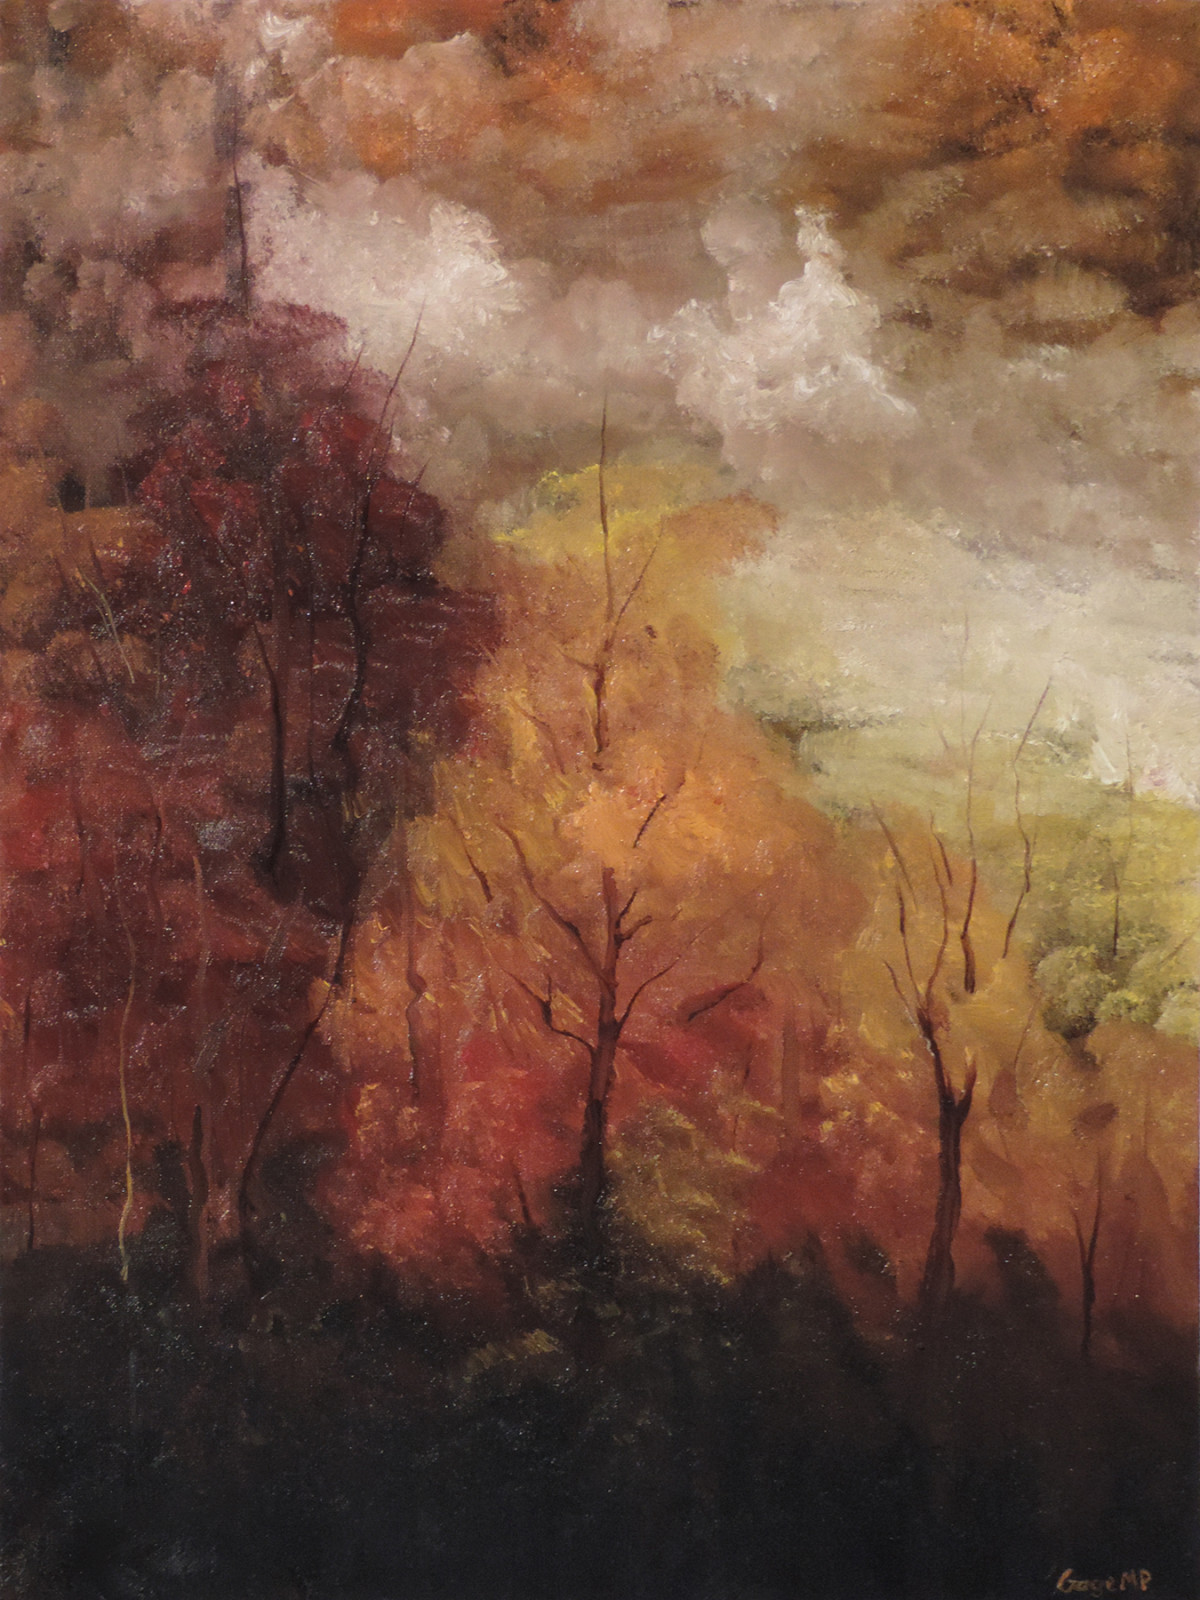 Rumtucket 1 - October - Oil on Canvas - 18 x 24